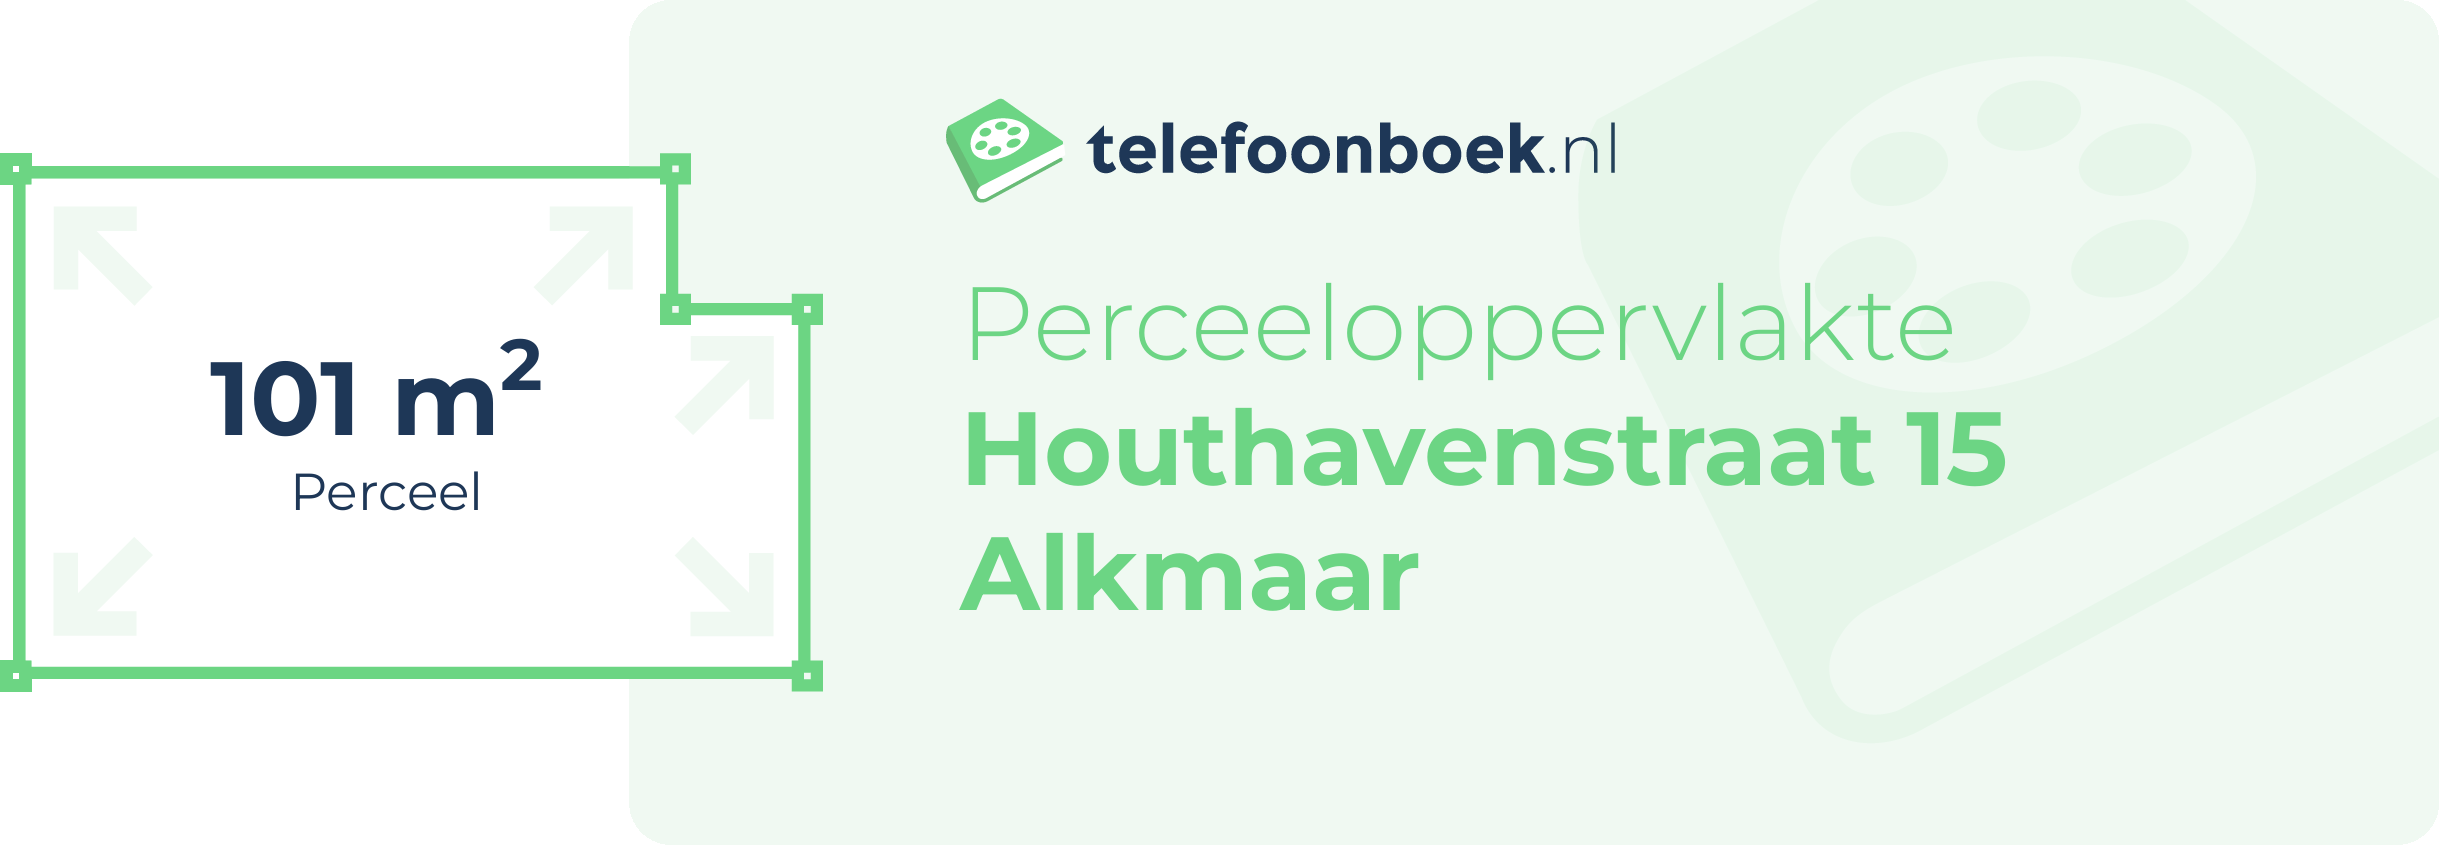 Perceeloppervlakte Houthavenstraat 15 Alkmaar